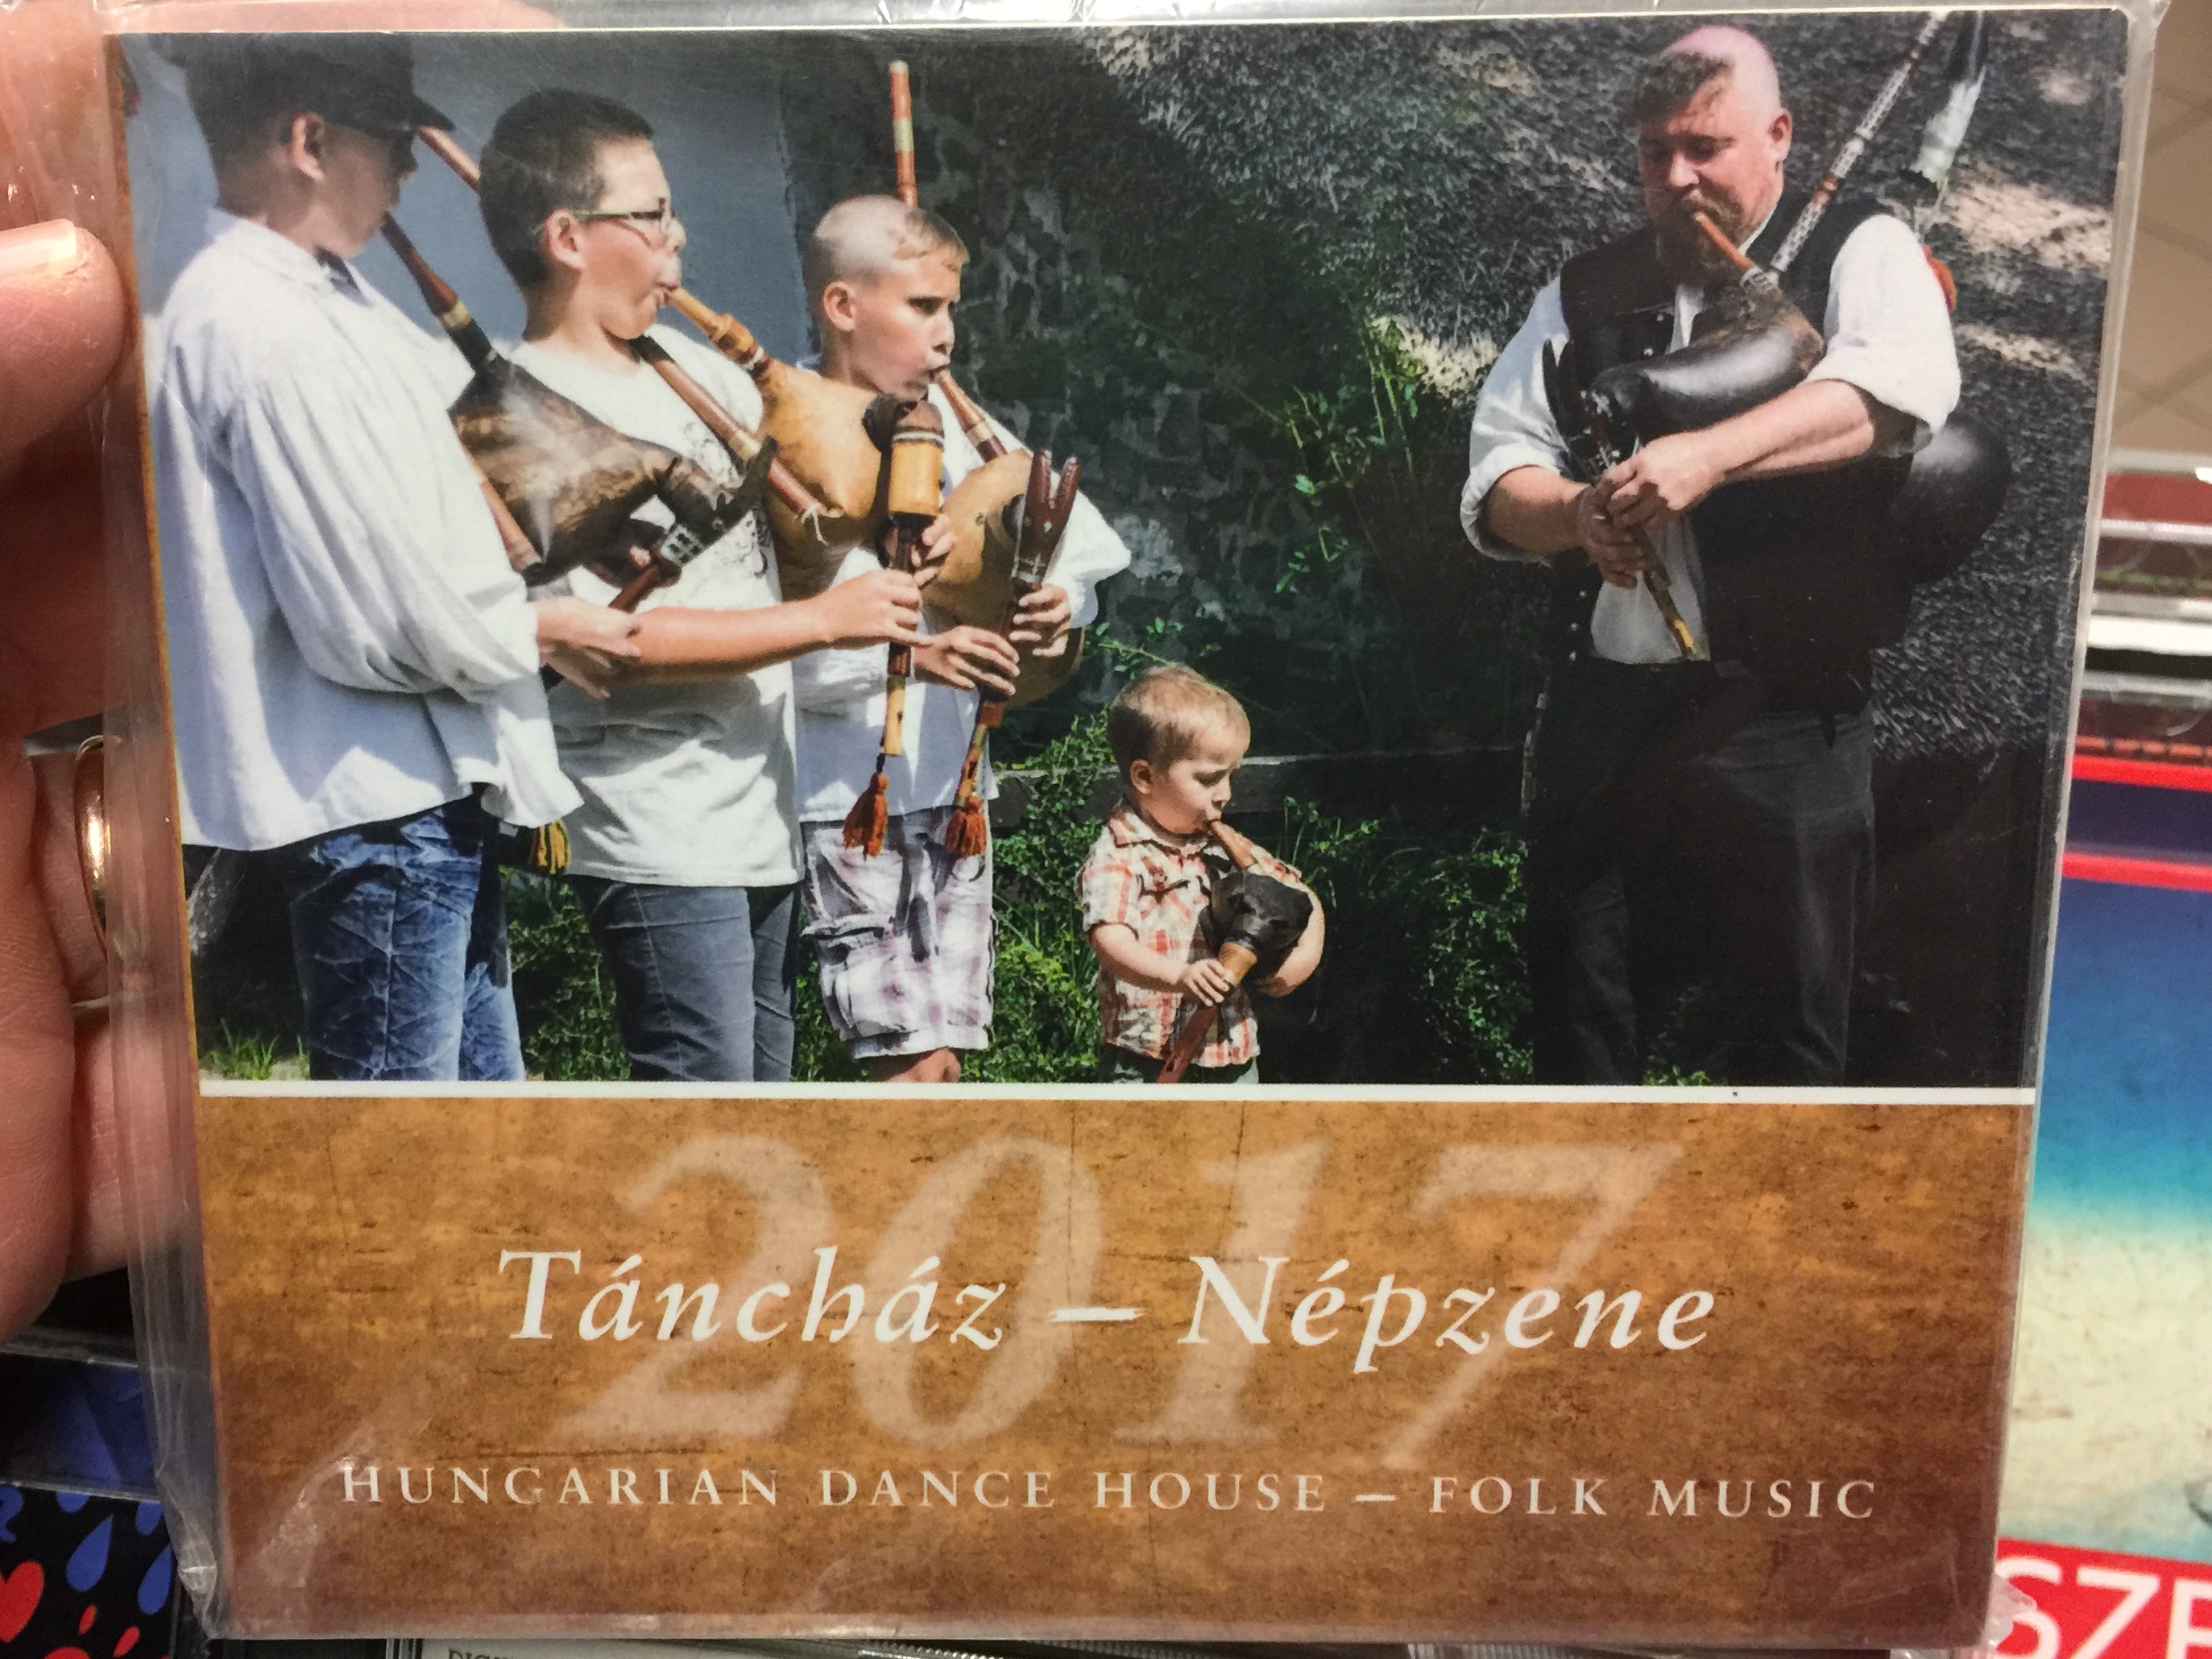 t-nch-z-n-pzene-2017-hungarian-dance-house-folk-music-hagyom-nyok-h-za-audio-cd-2017-hhcd-0116-1-.jpg